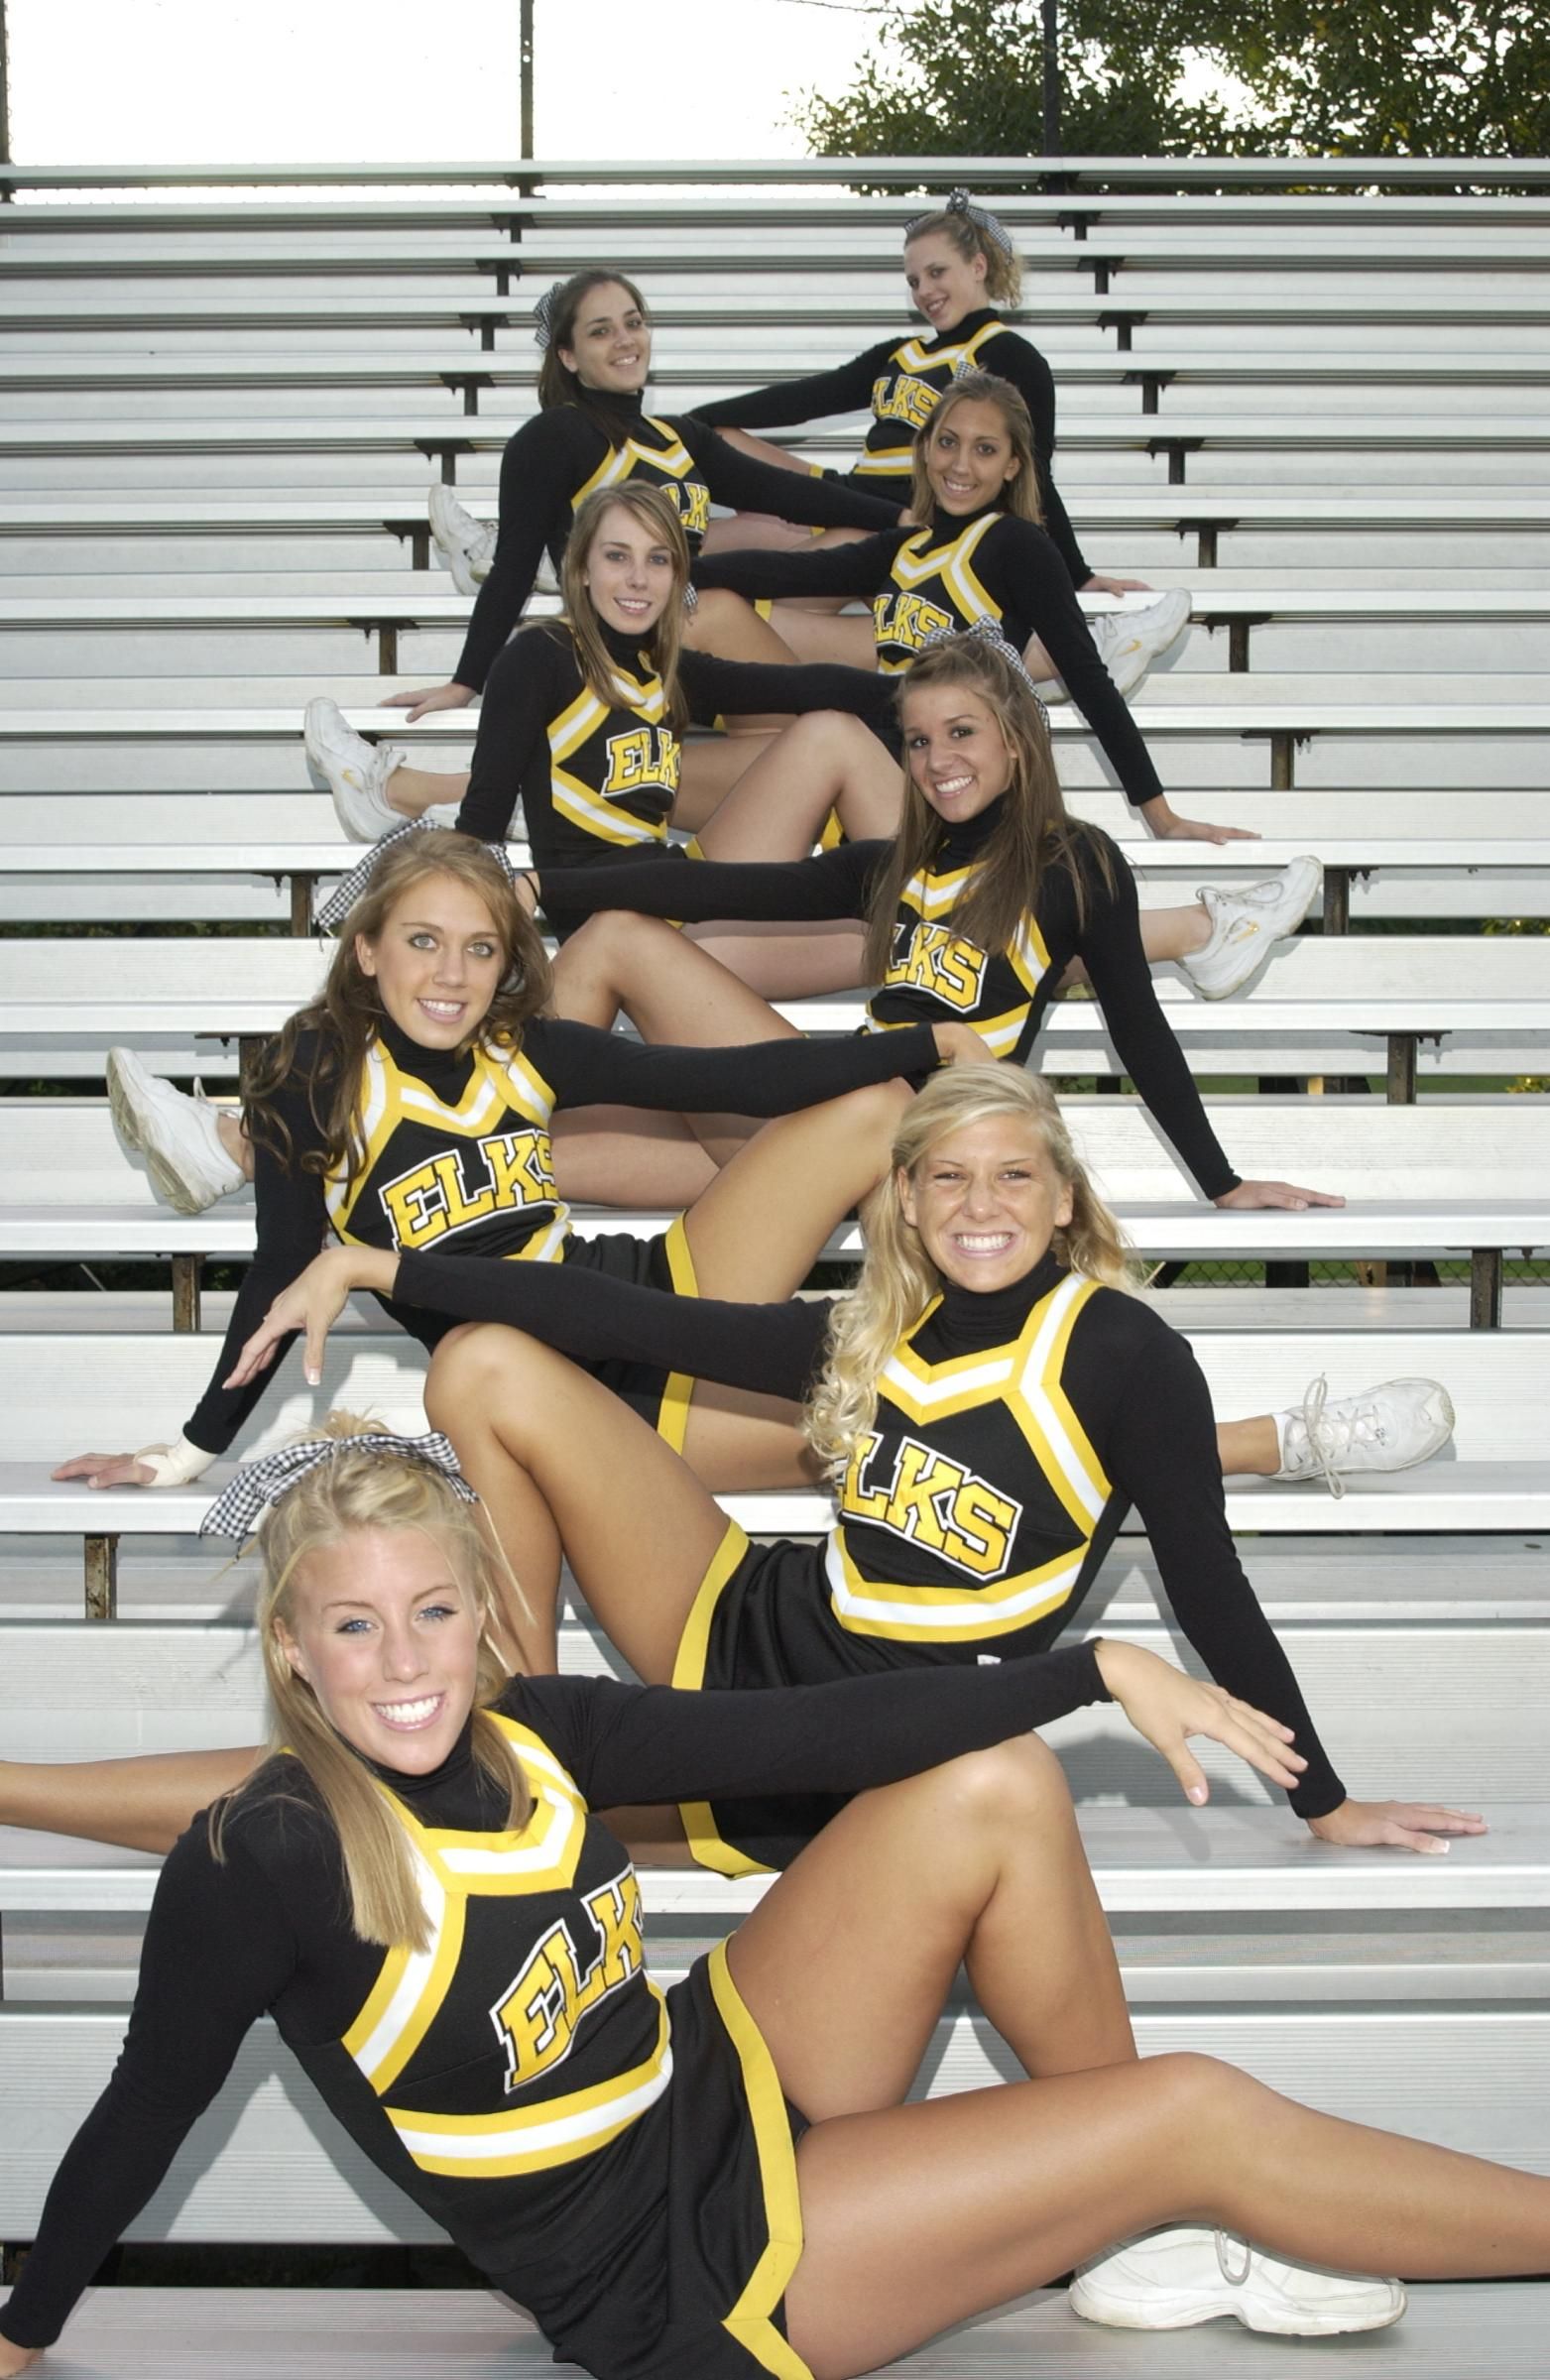 sexy college cheerleaders high